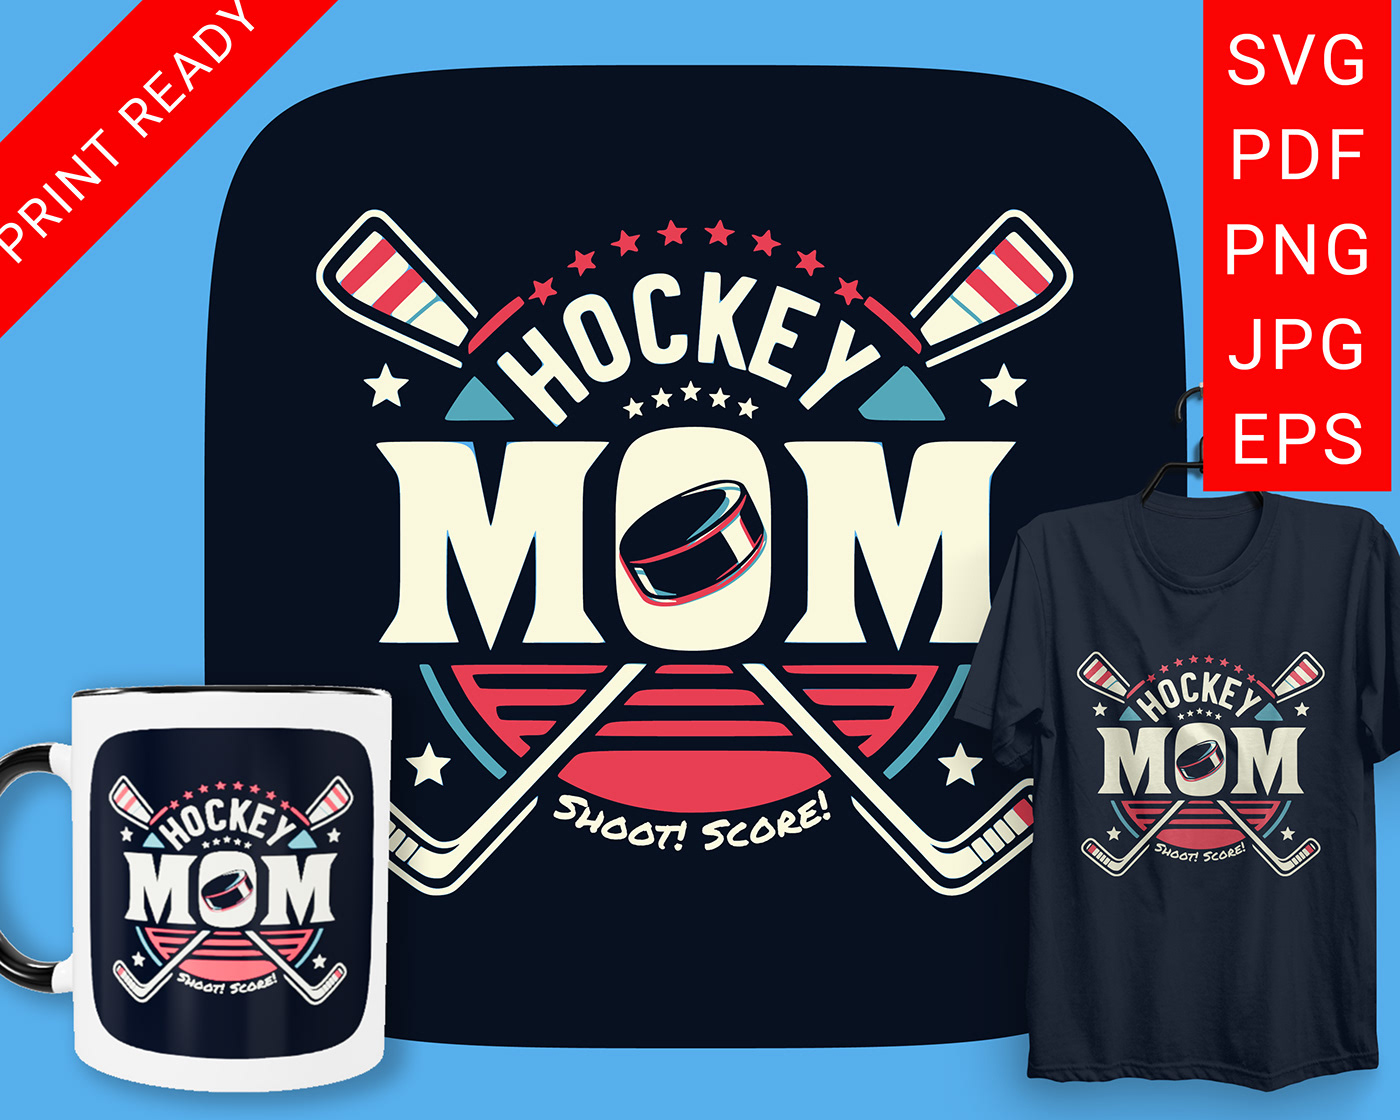 Hockey Mom SVG hockey logo on skates with the kids. prints for ma shirts, mugs. Print Ready